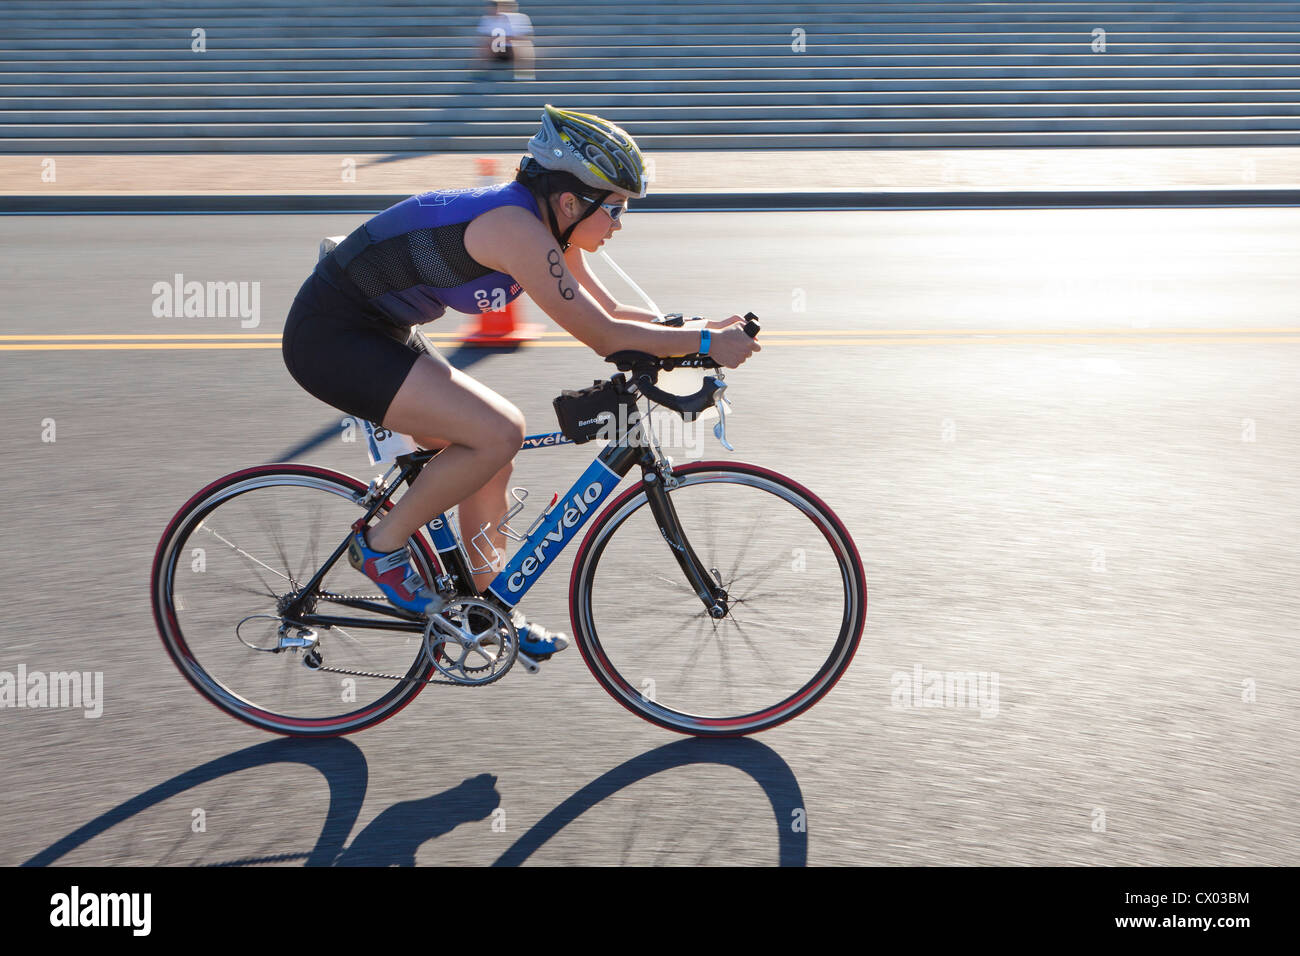 Female cyclist racing on road (bike race, bicycle racing, bike racer) - USA Stock Photo